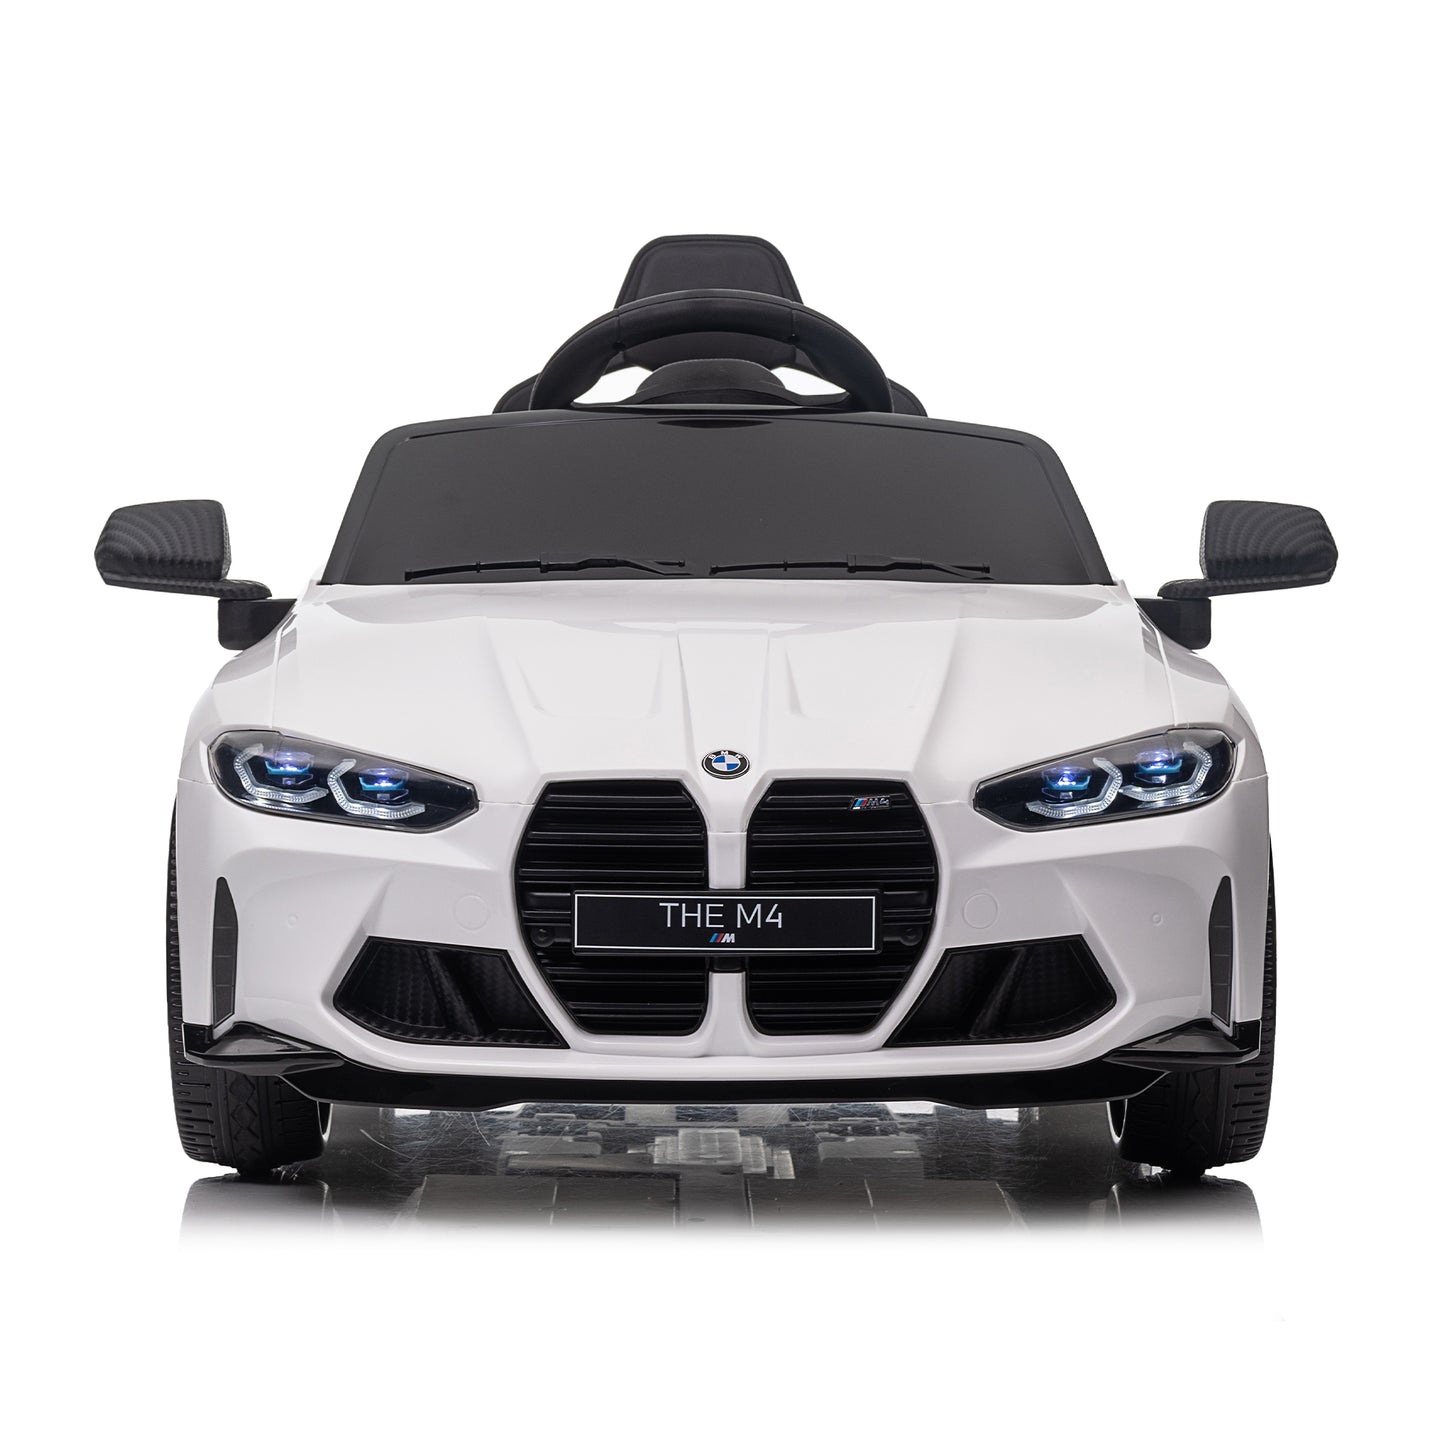 White BMW M4 12v Kids ride on toy car 2.4G W/Parents Remote Control Three speed adjustable